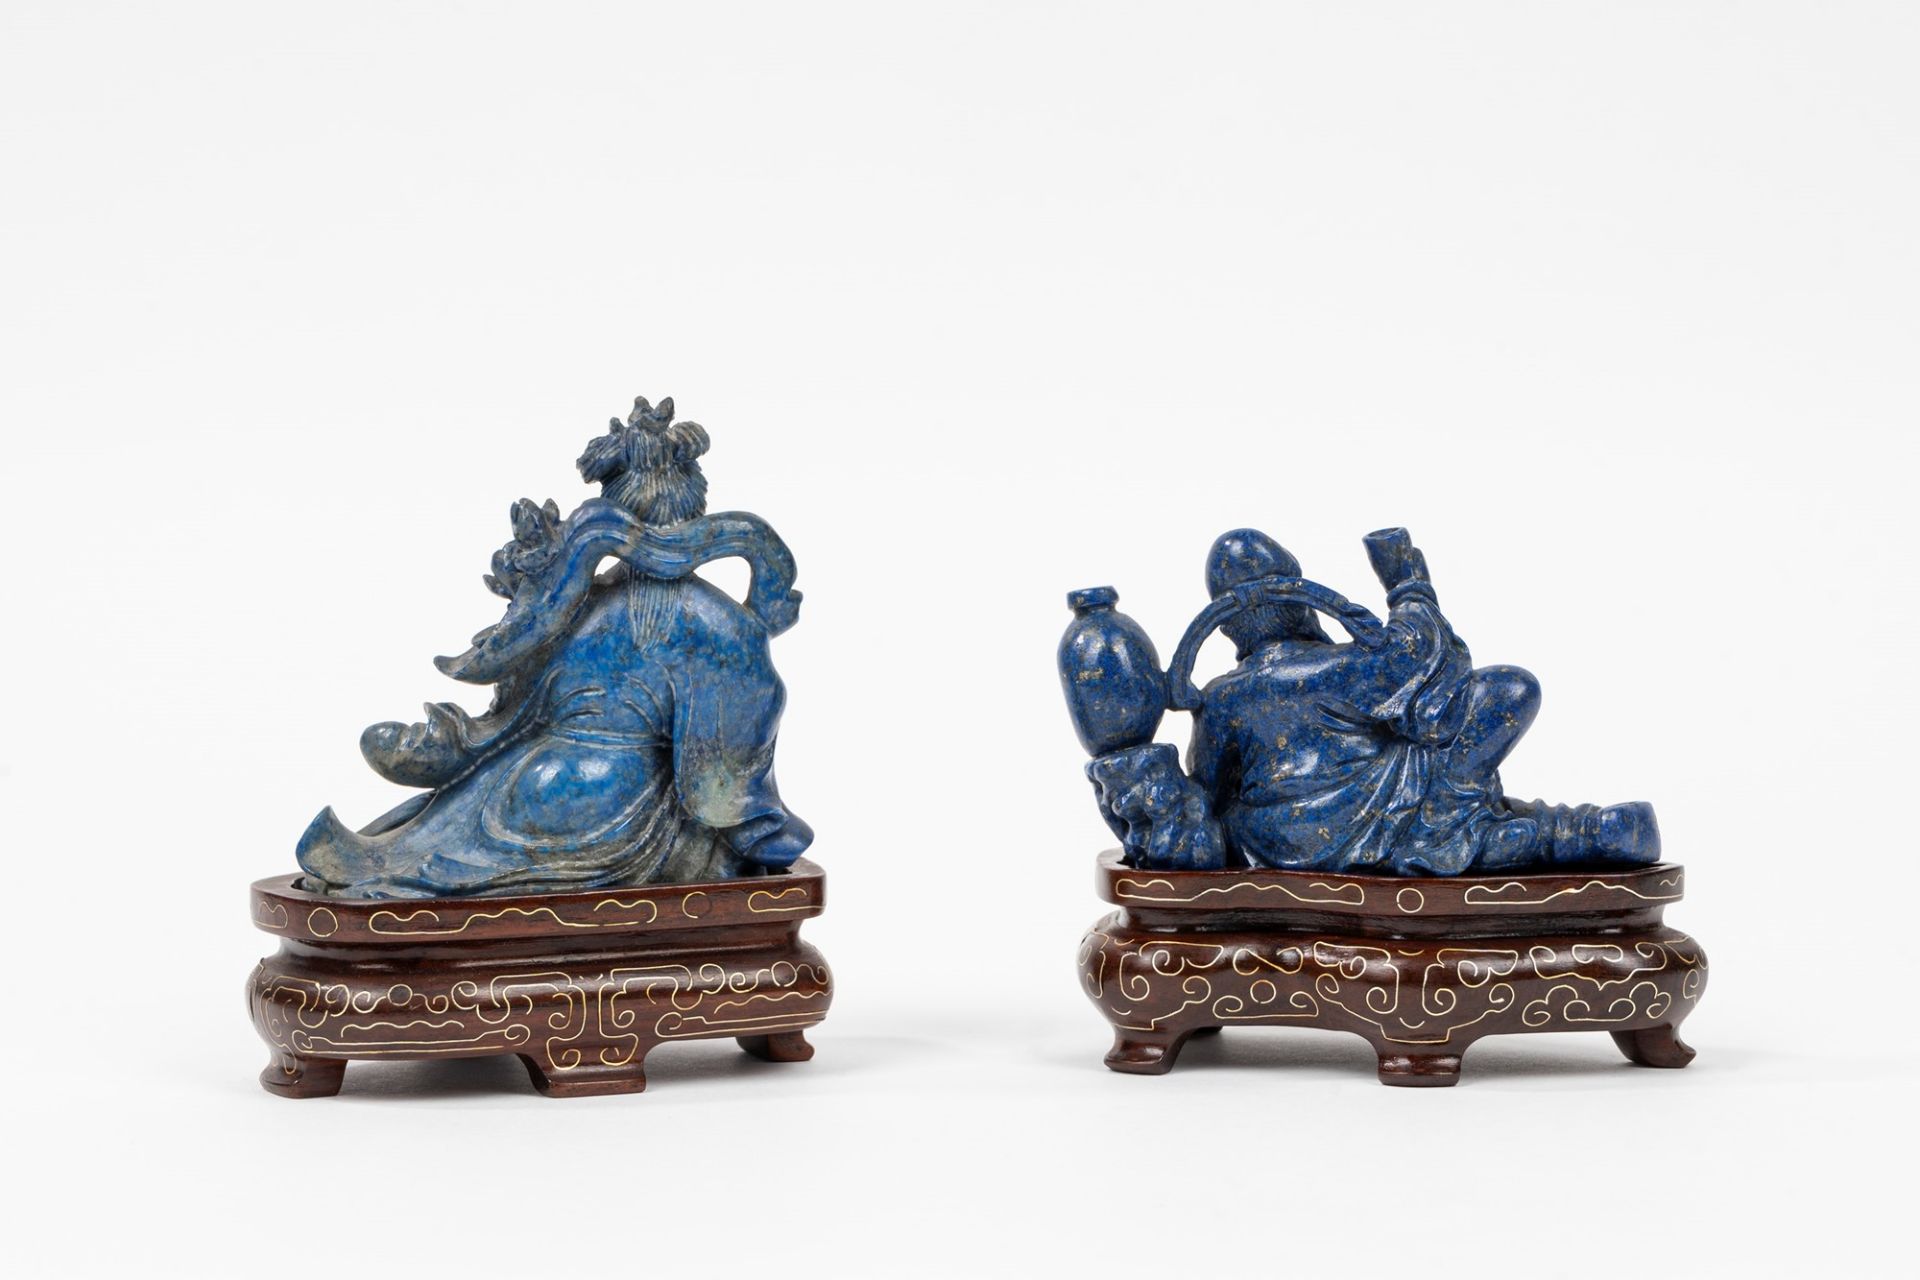 Pair of small lapis lazuli sculptures, China, 20th century - Image 2 of 2